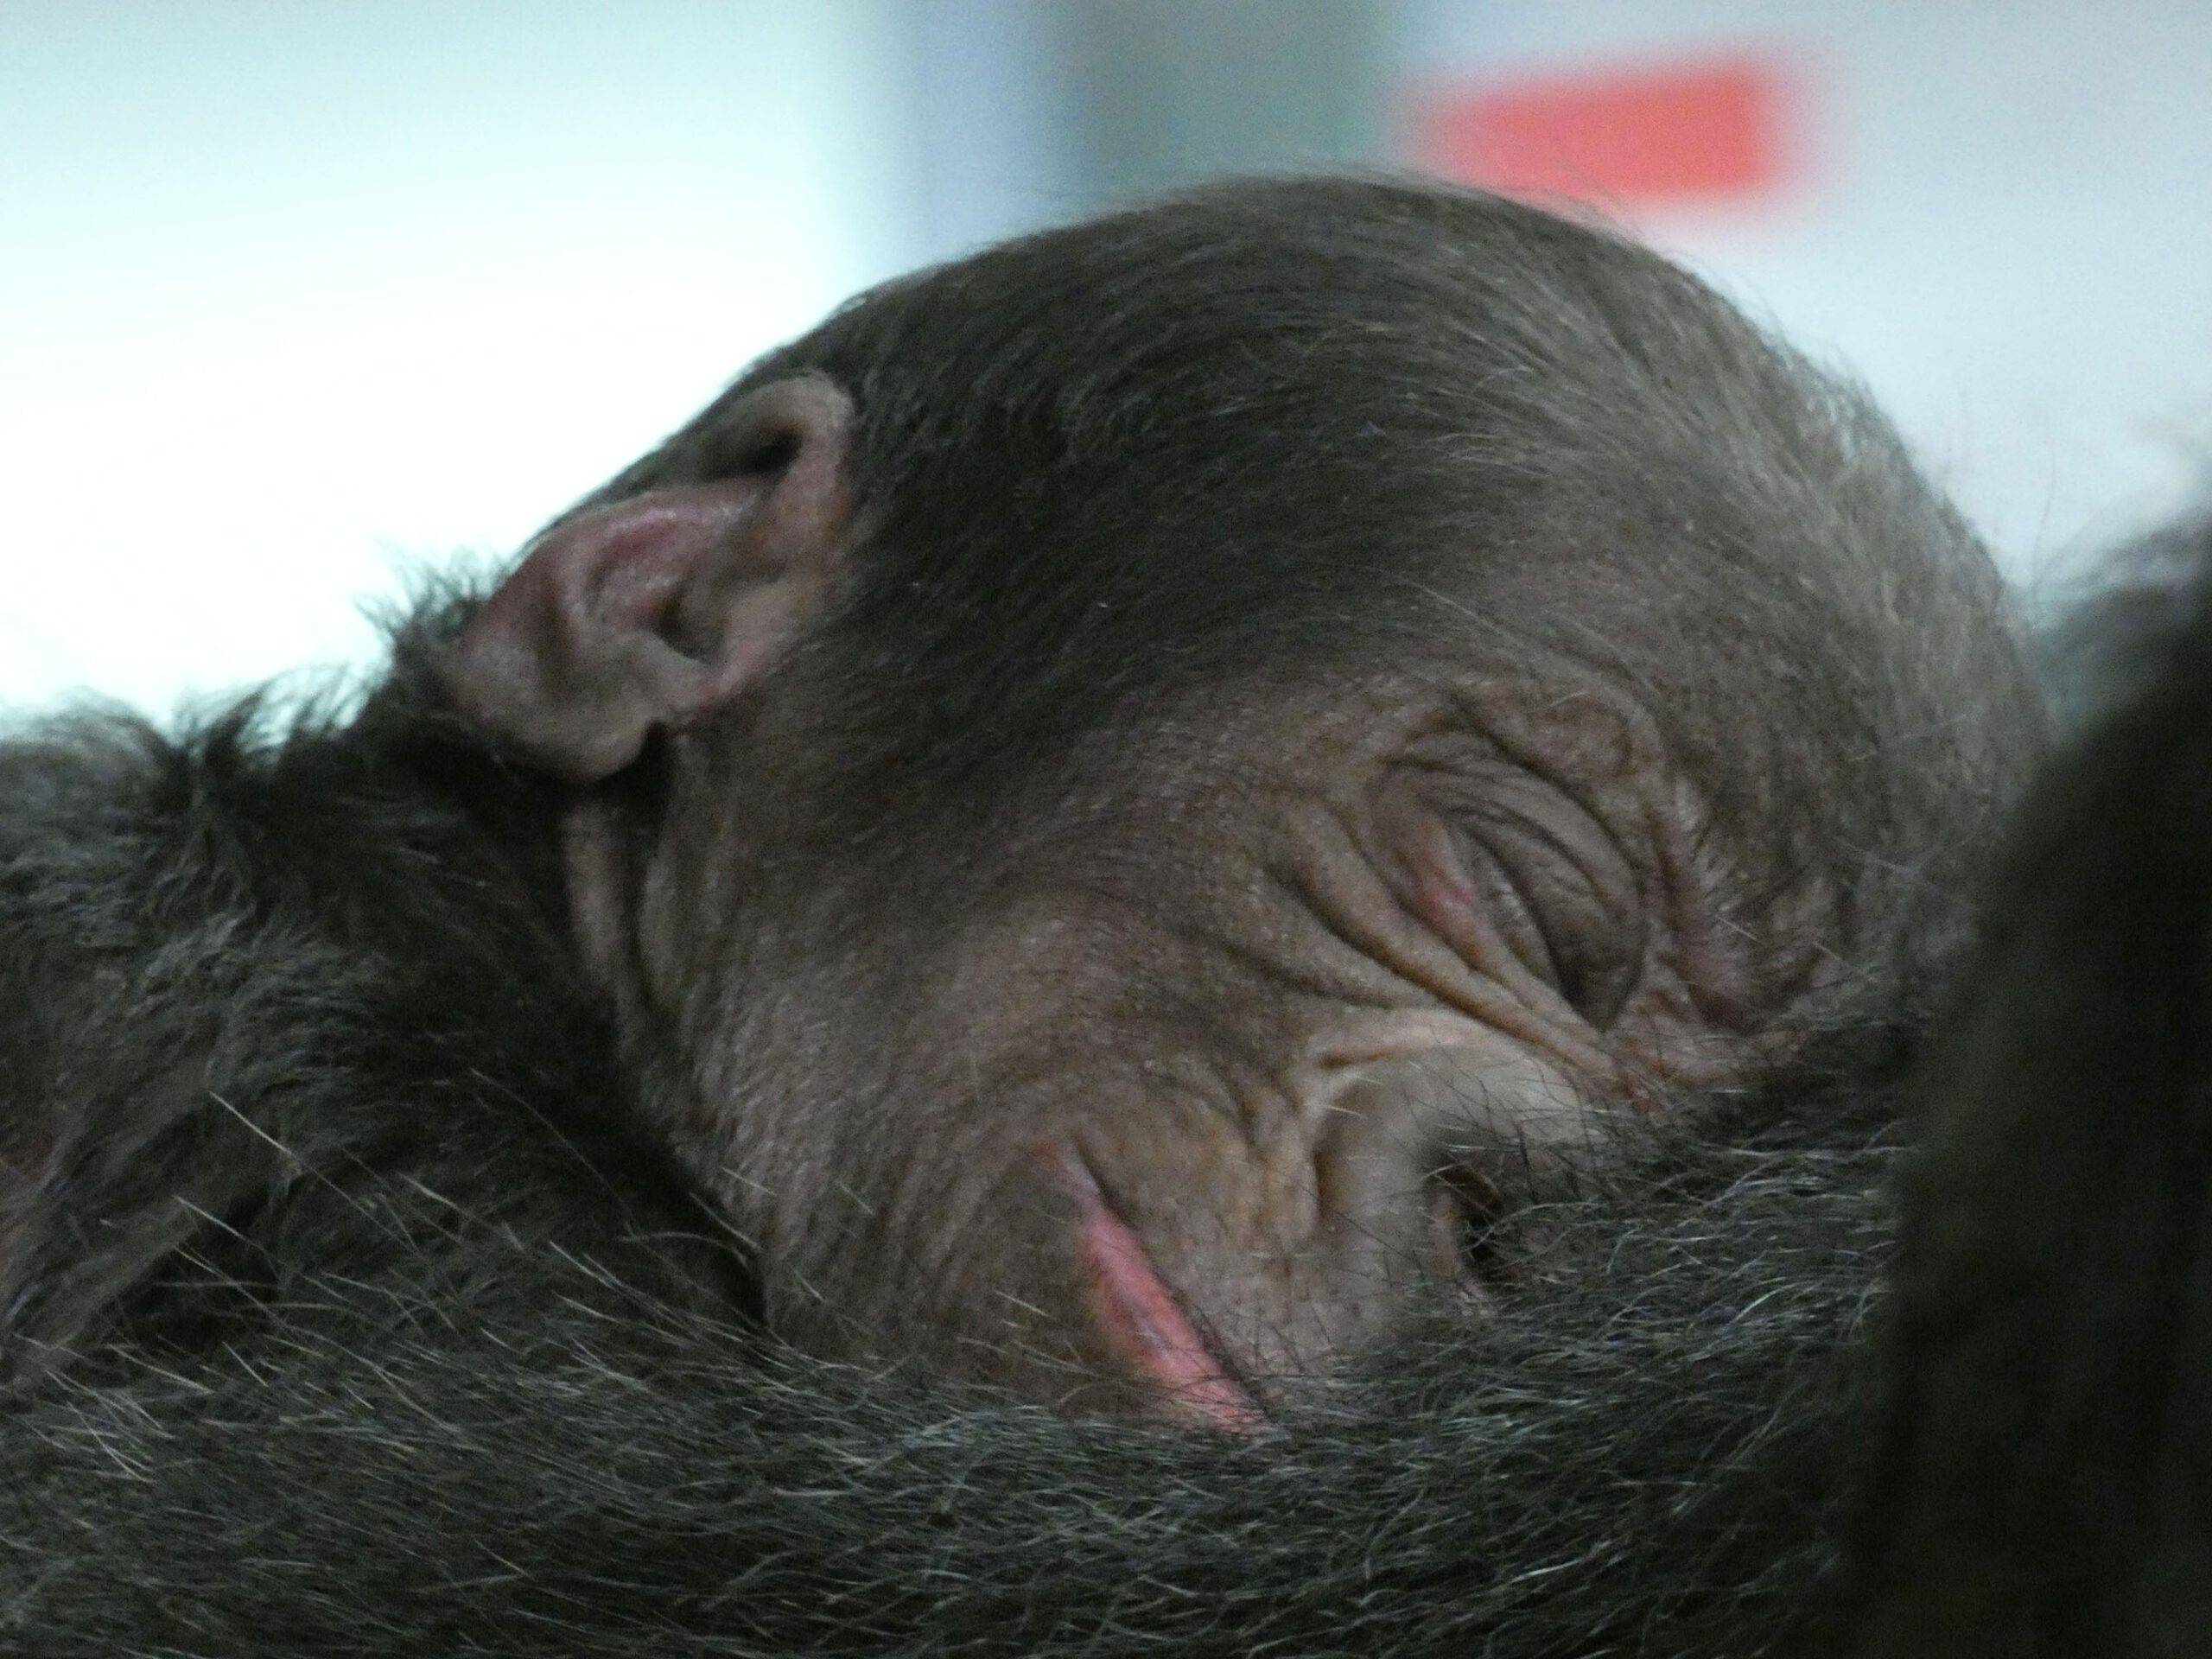 Baby Gorilla and Hippo born July 2021